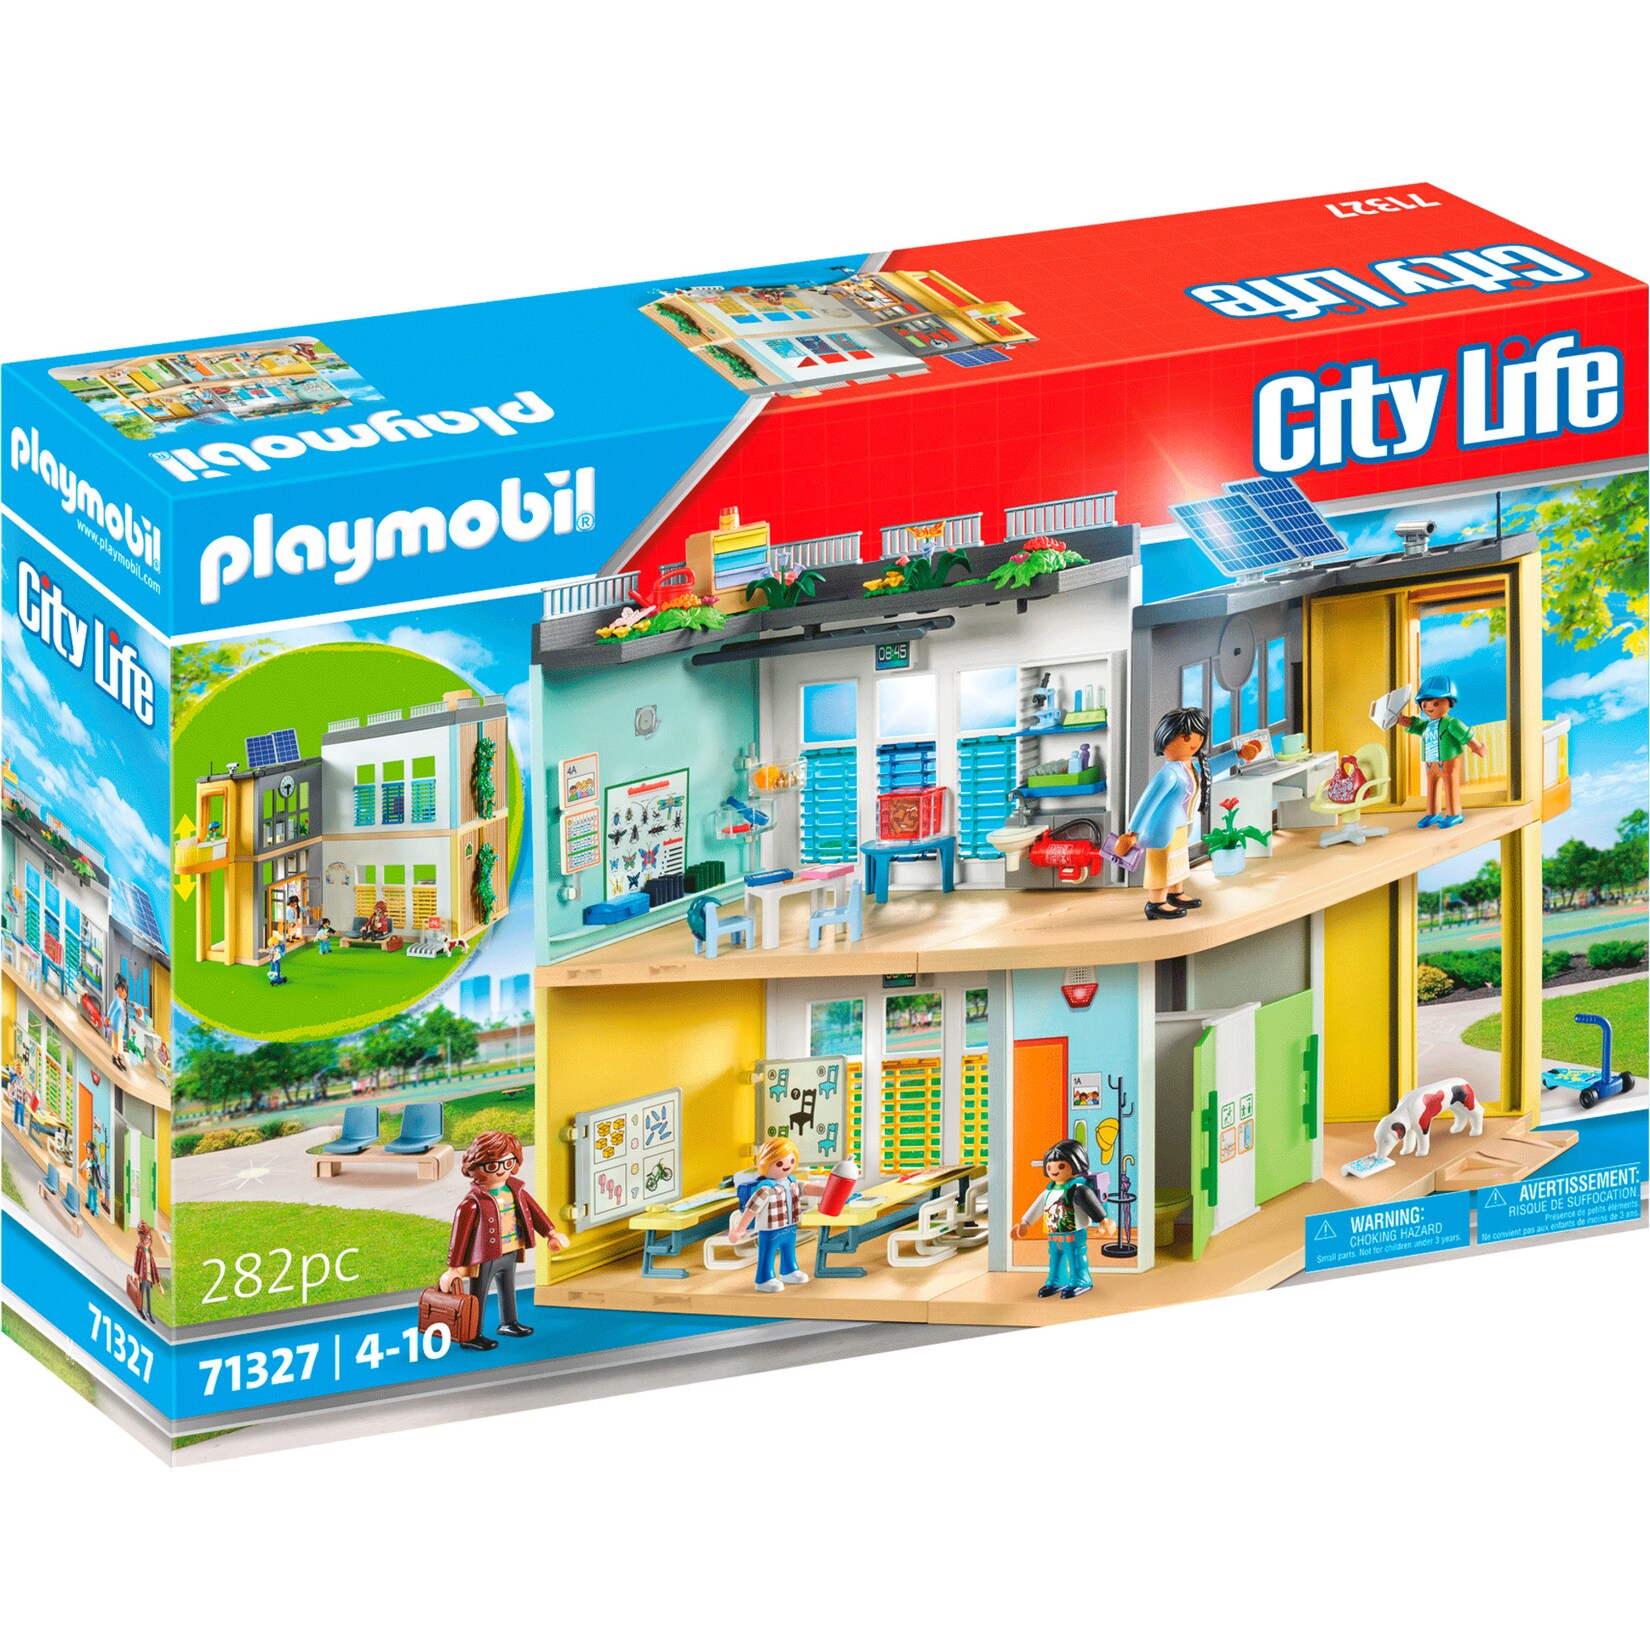 PLAYMOBIL Konstruktionsspielzeug City Life Große Schule